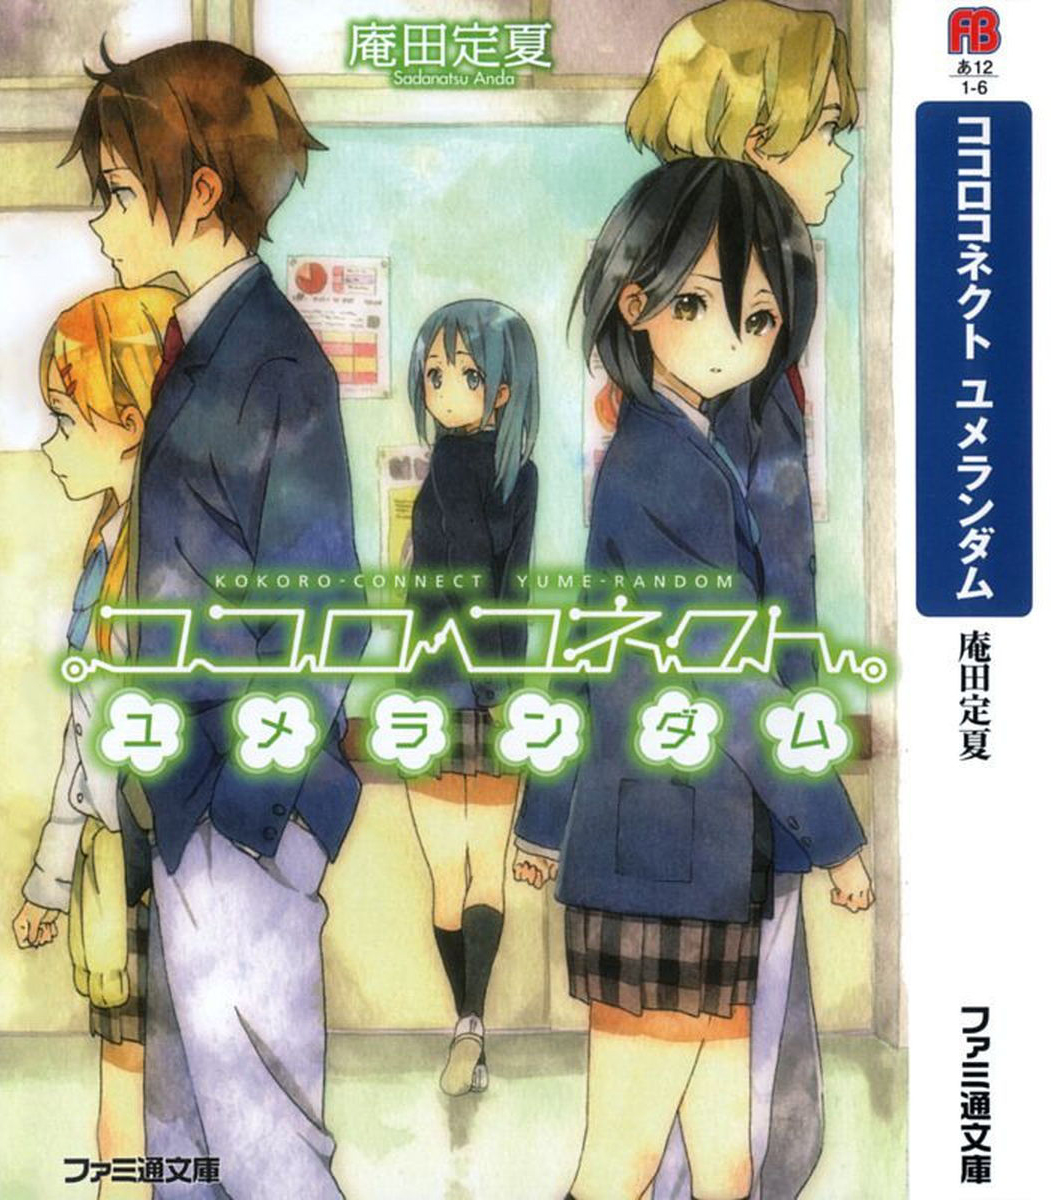 Kokoro Connect Yume Random (ココロコネクトユメランダム) is a Japanese light novel writte...